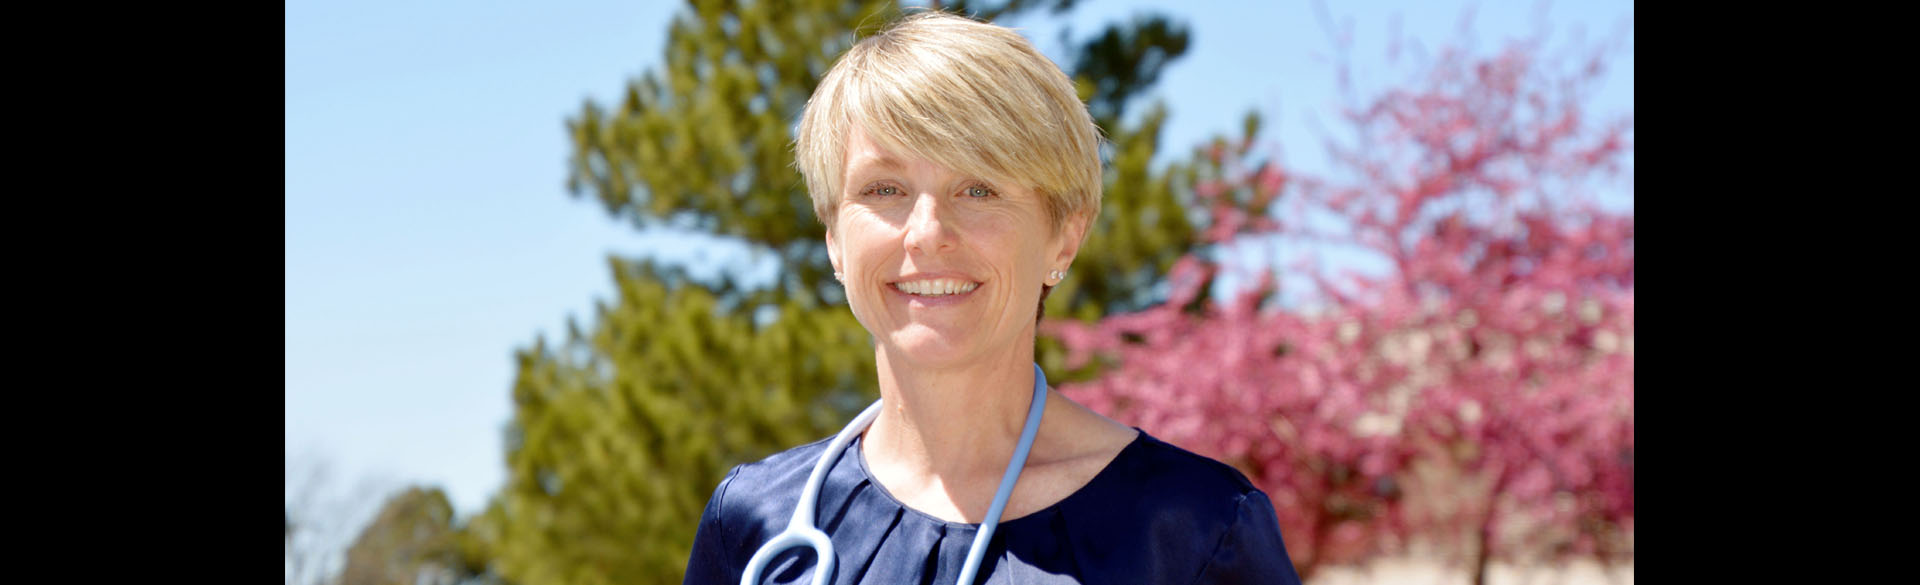 Aurora Public Schools Lead School Nurse Consultant Marnie McKercher DNP '18